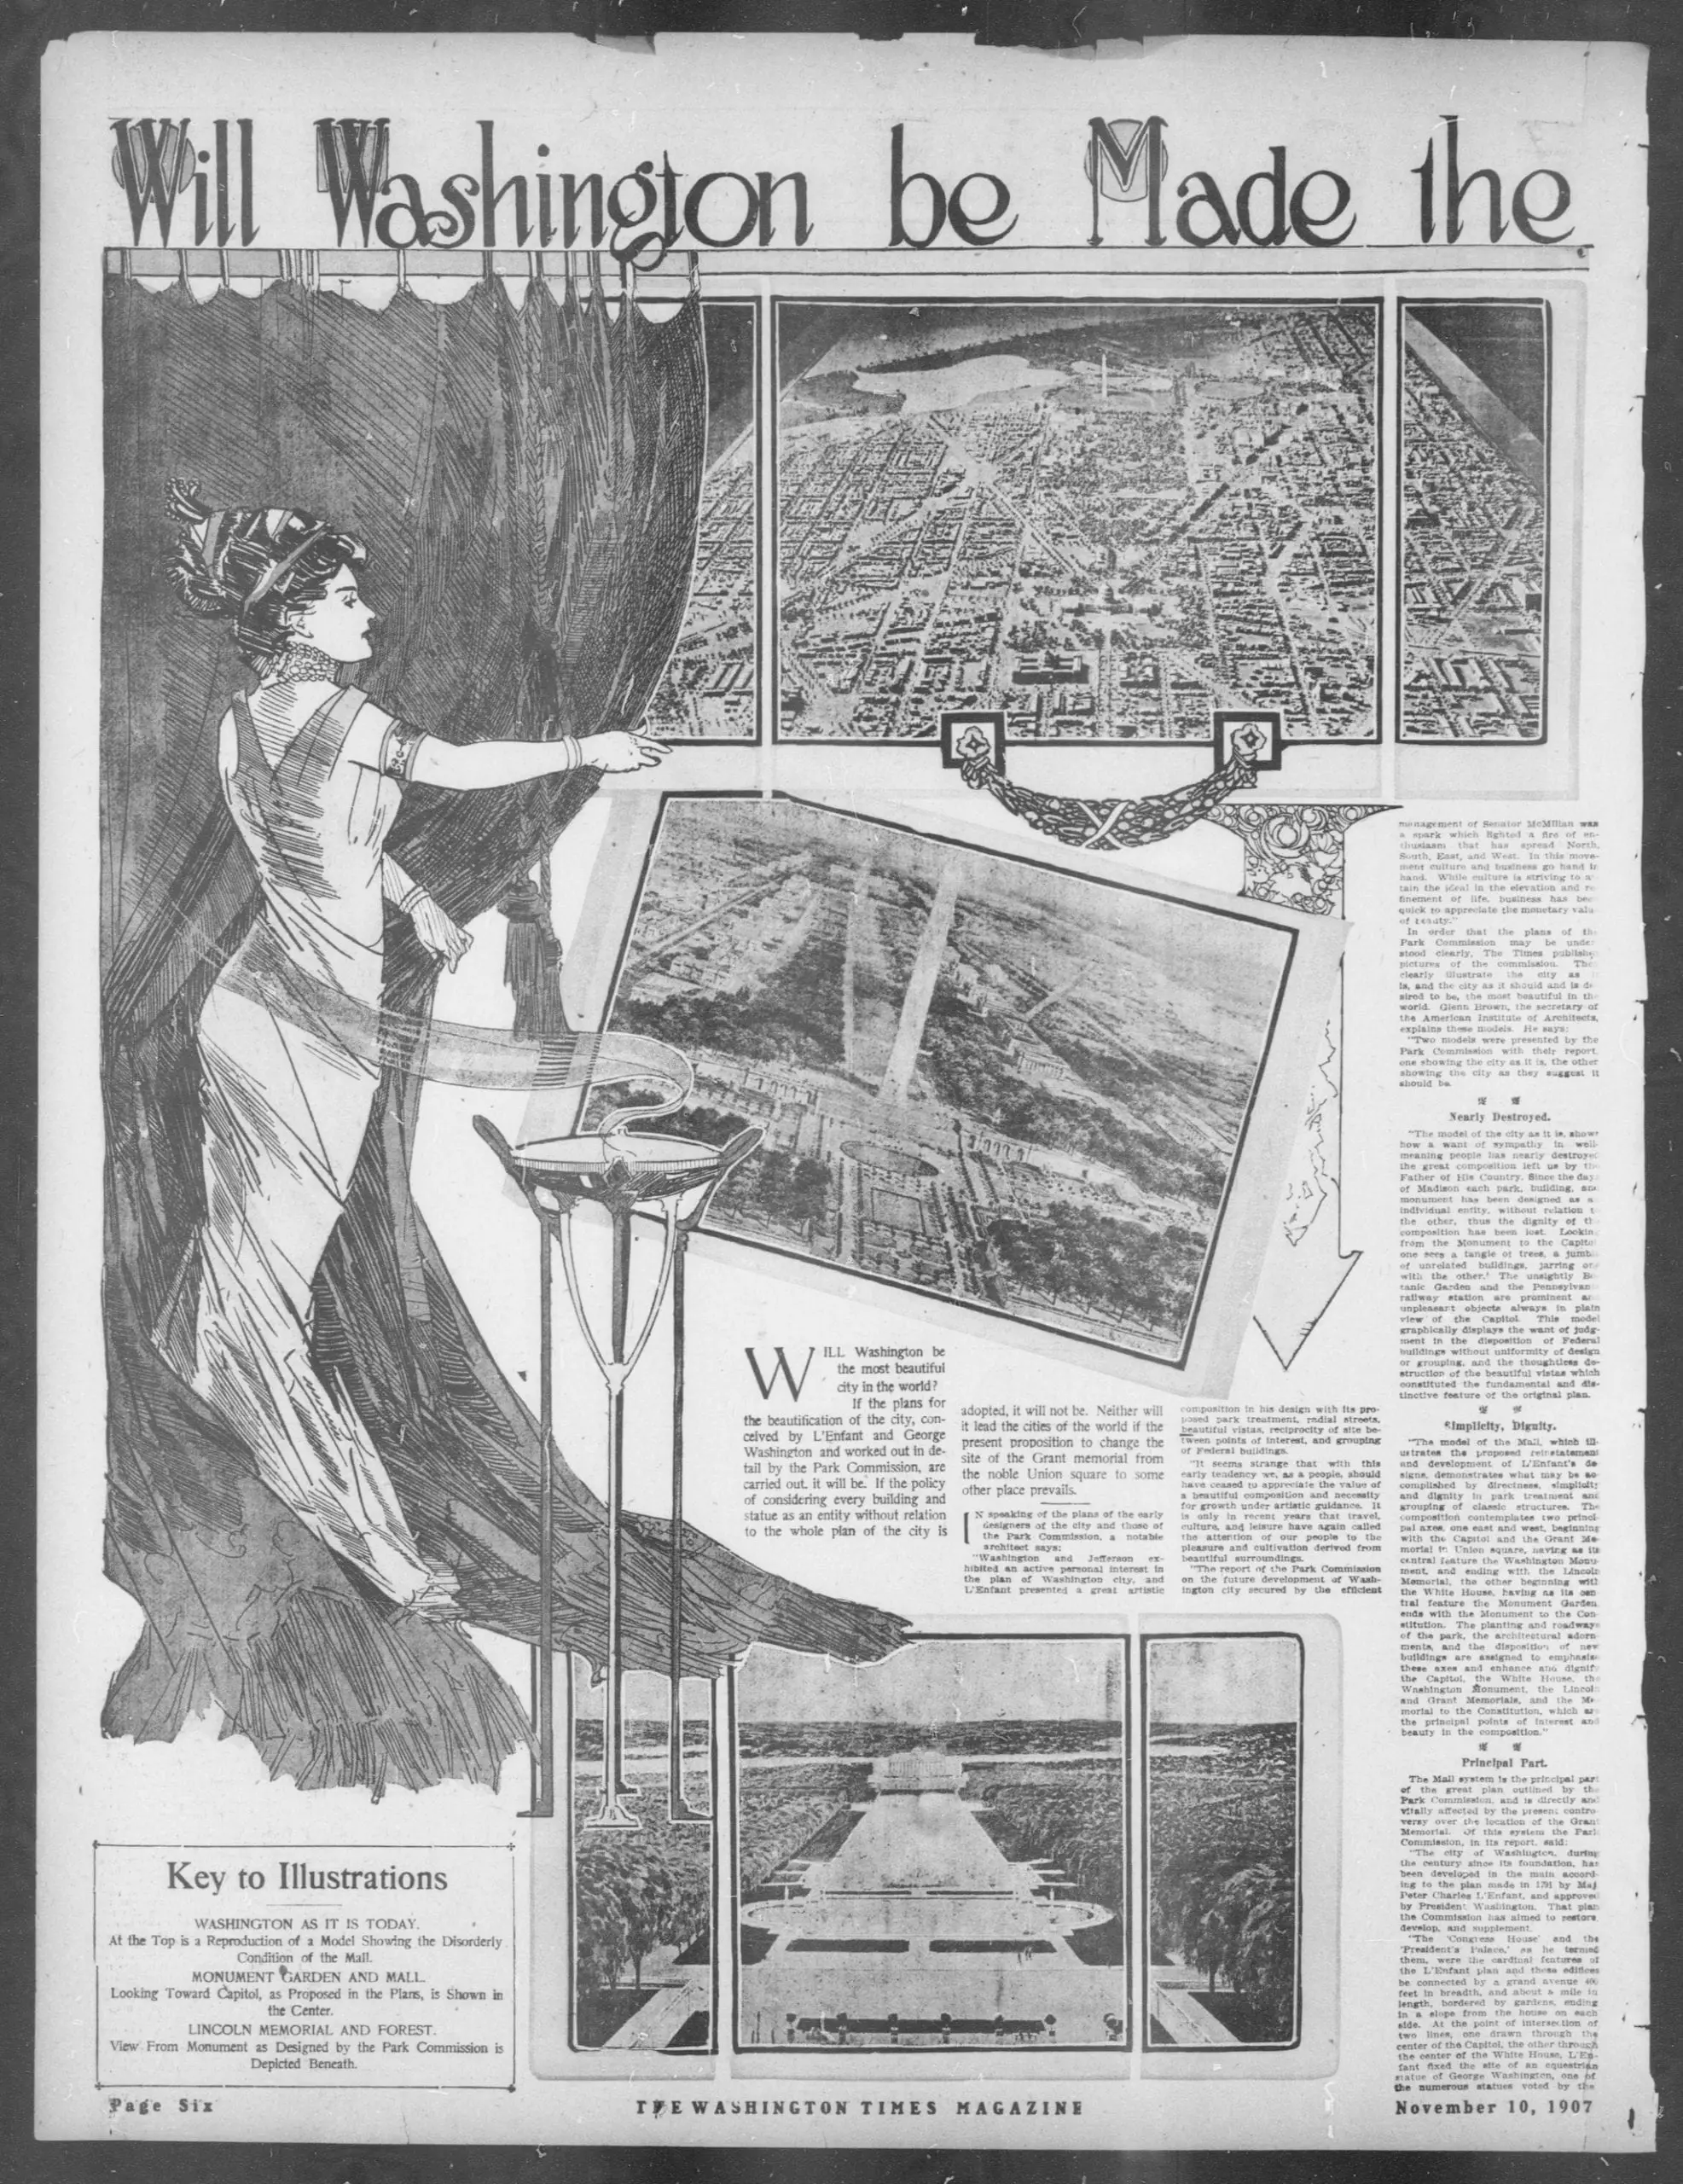 The Washington Times - November 10th 1907